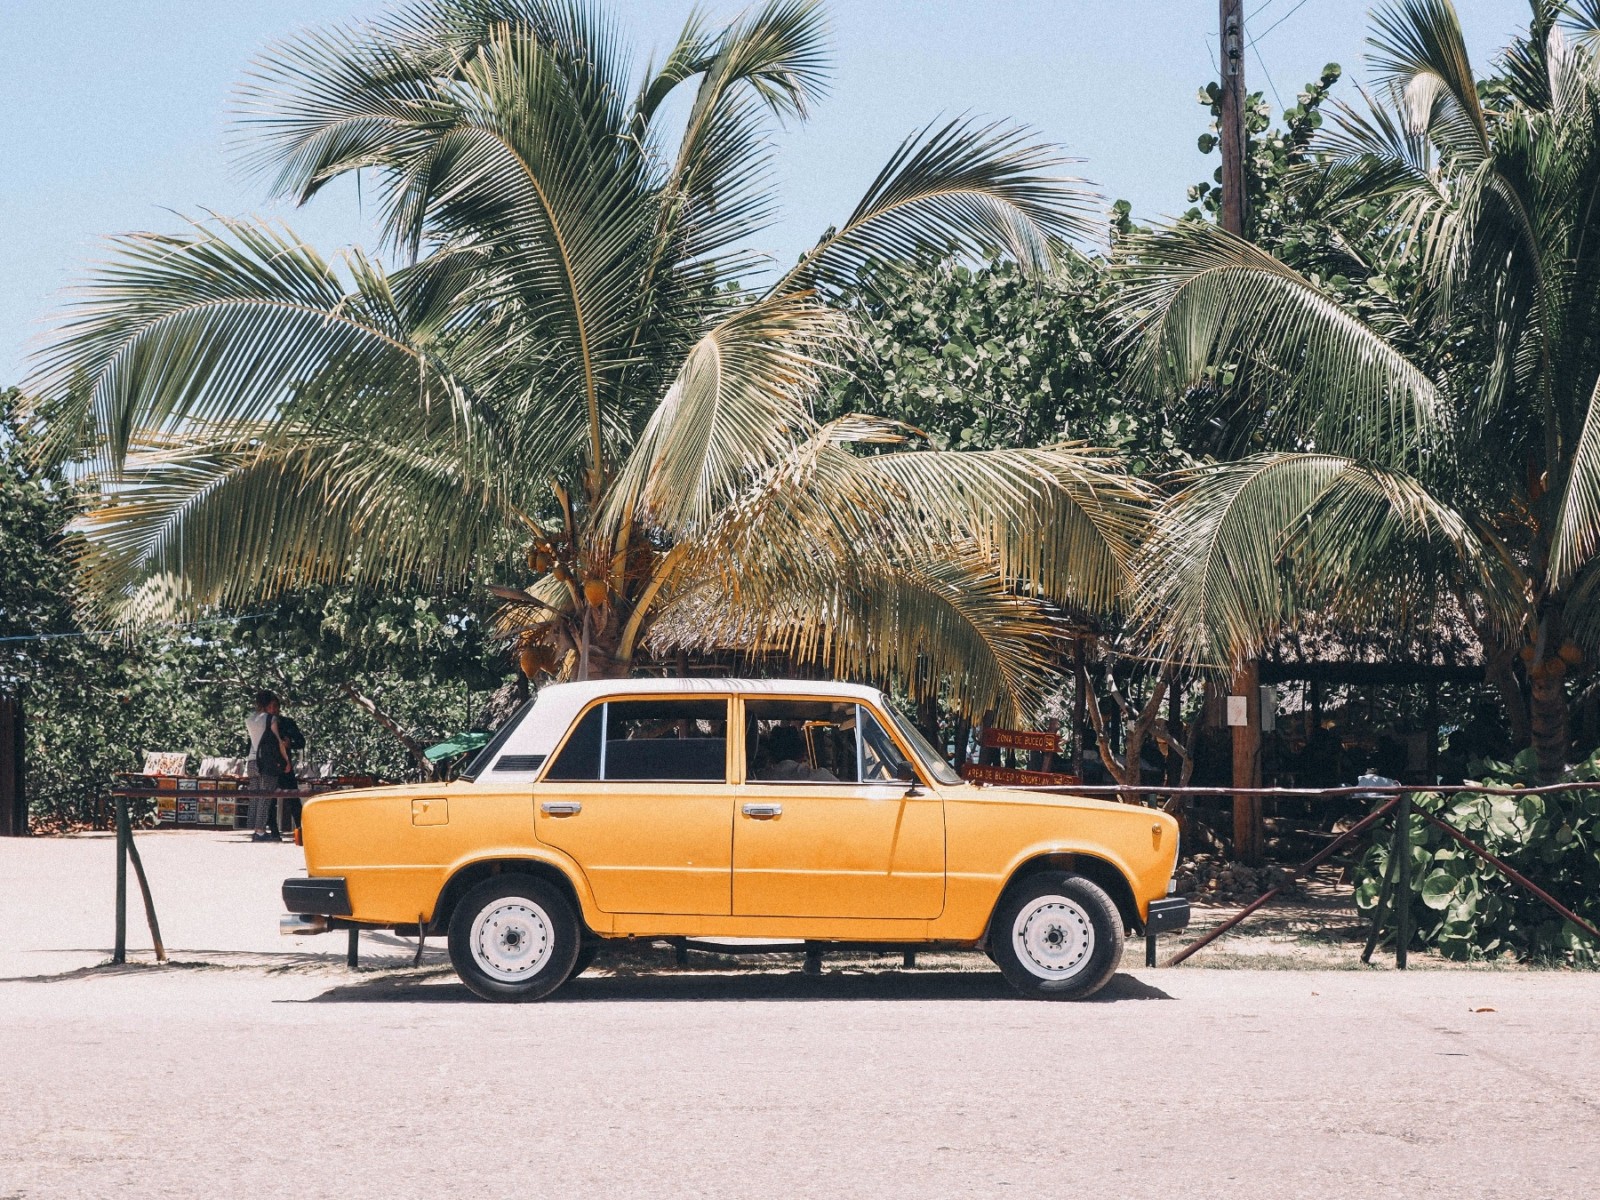 A yellow small Cuban car